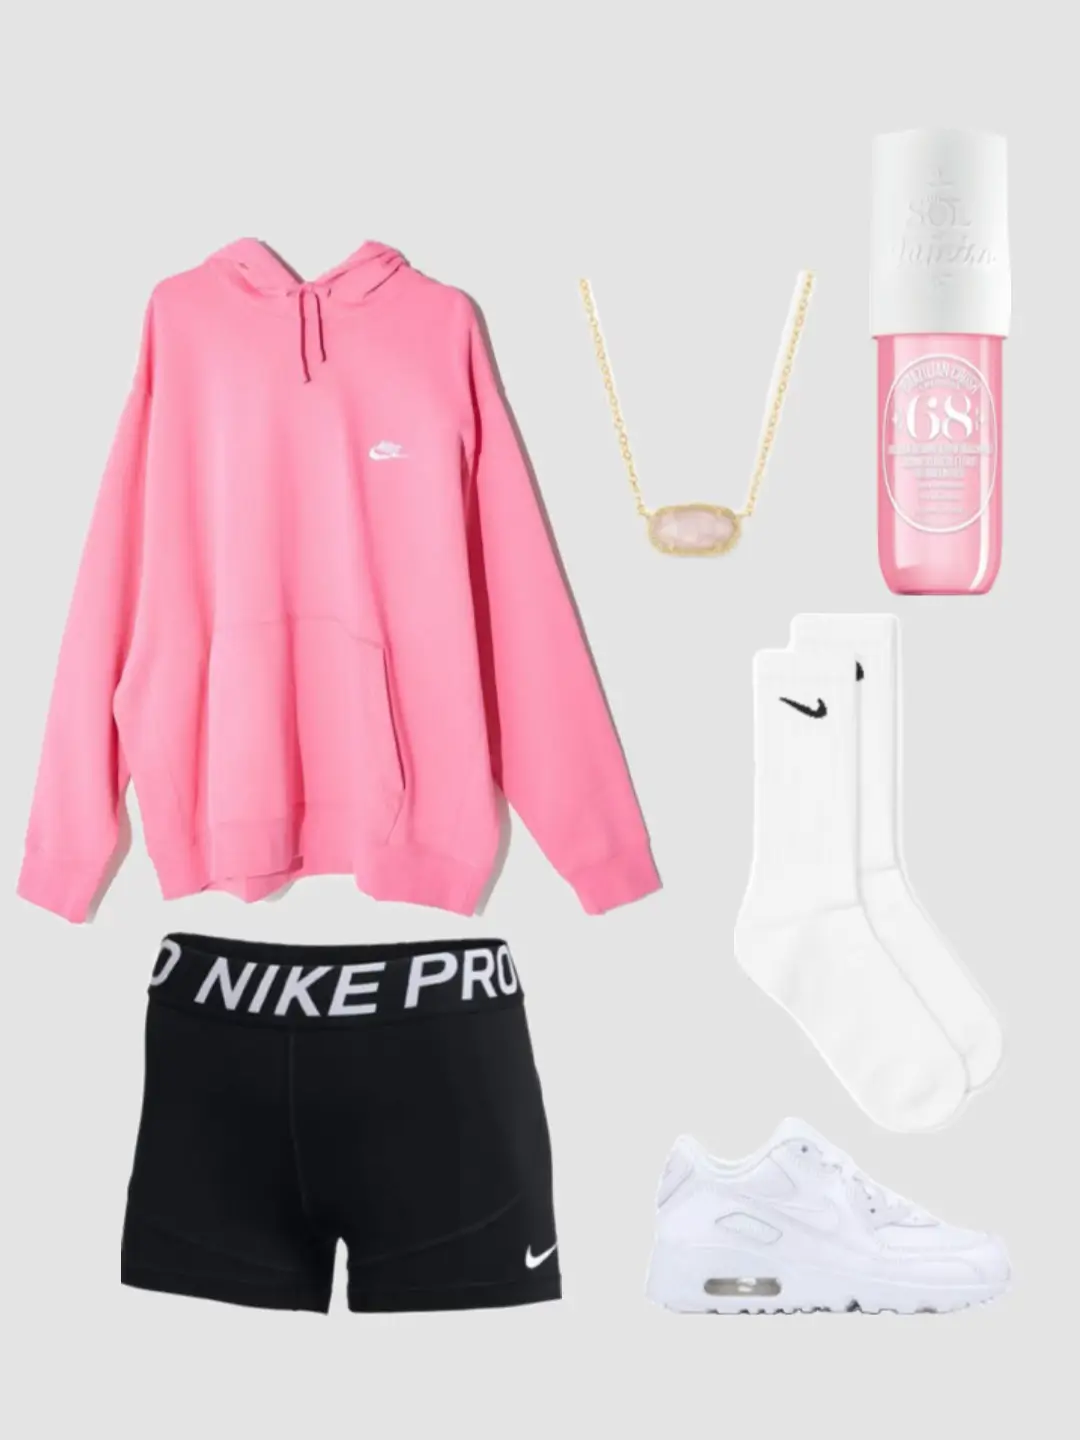 Nike Pro WOMENS Cool Mesh Top  Compression shirt women, Nike outfits, Cute  nike outfits